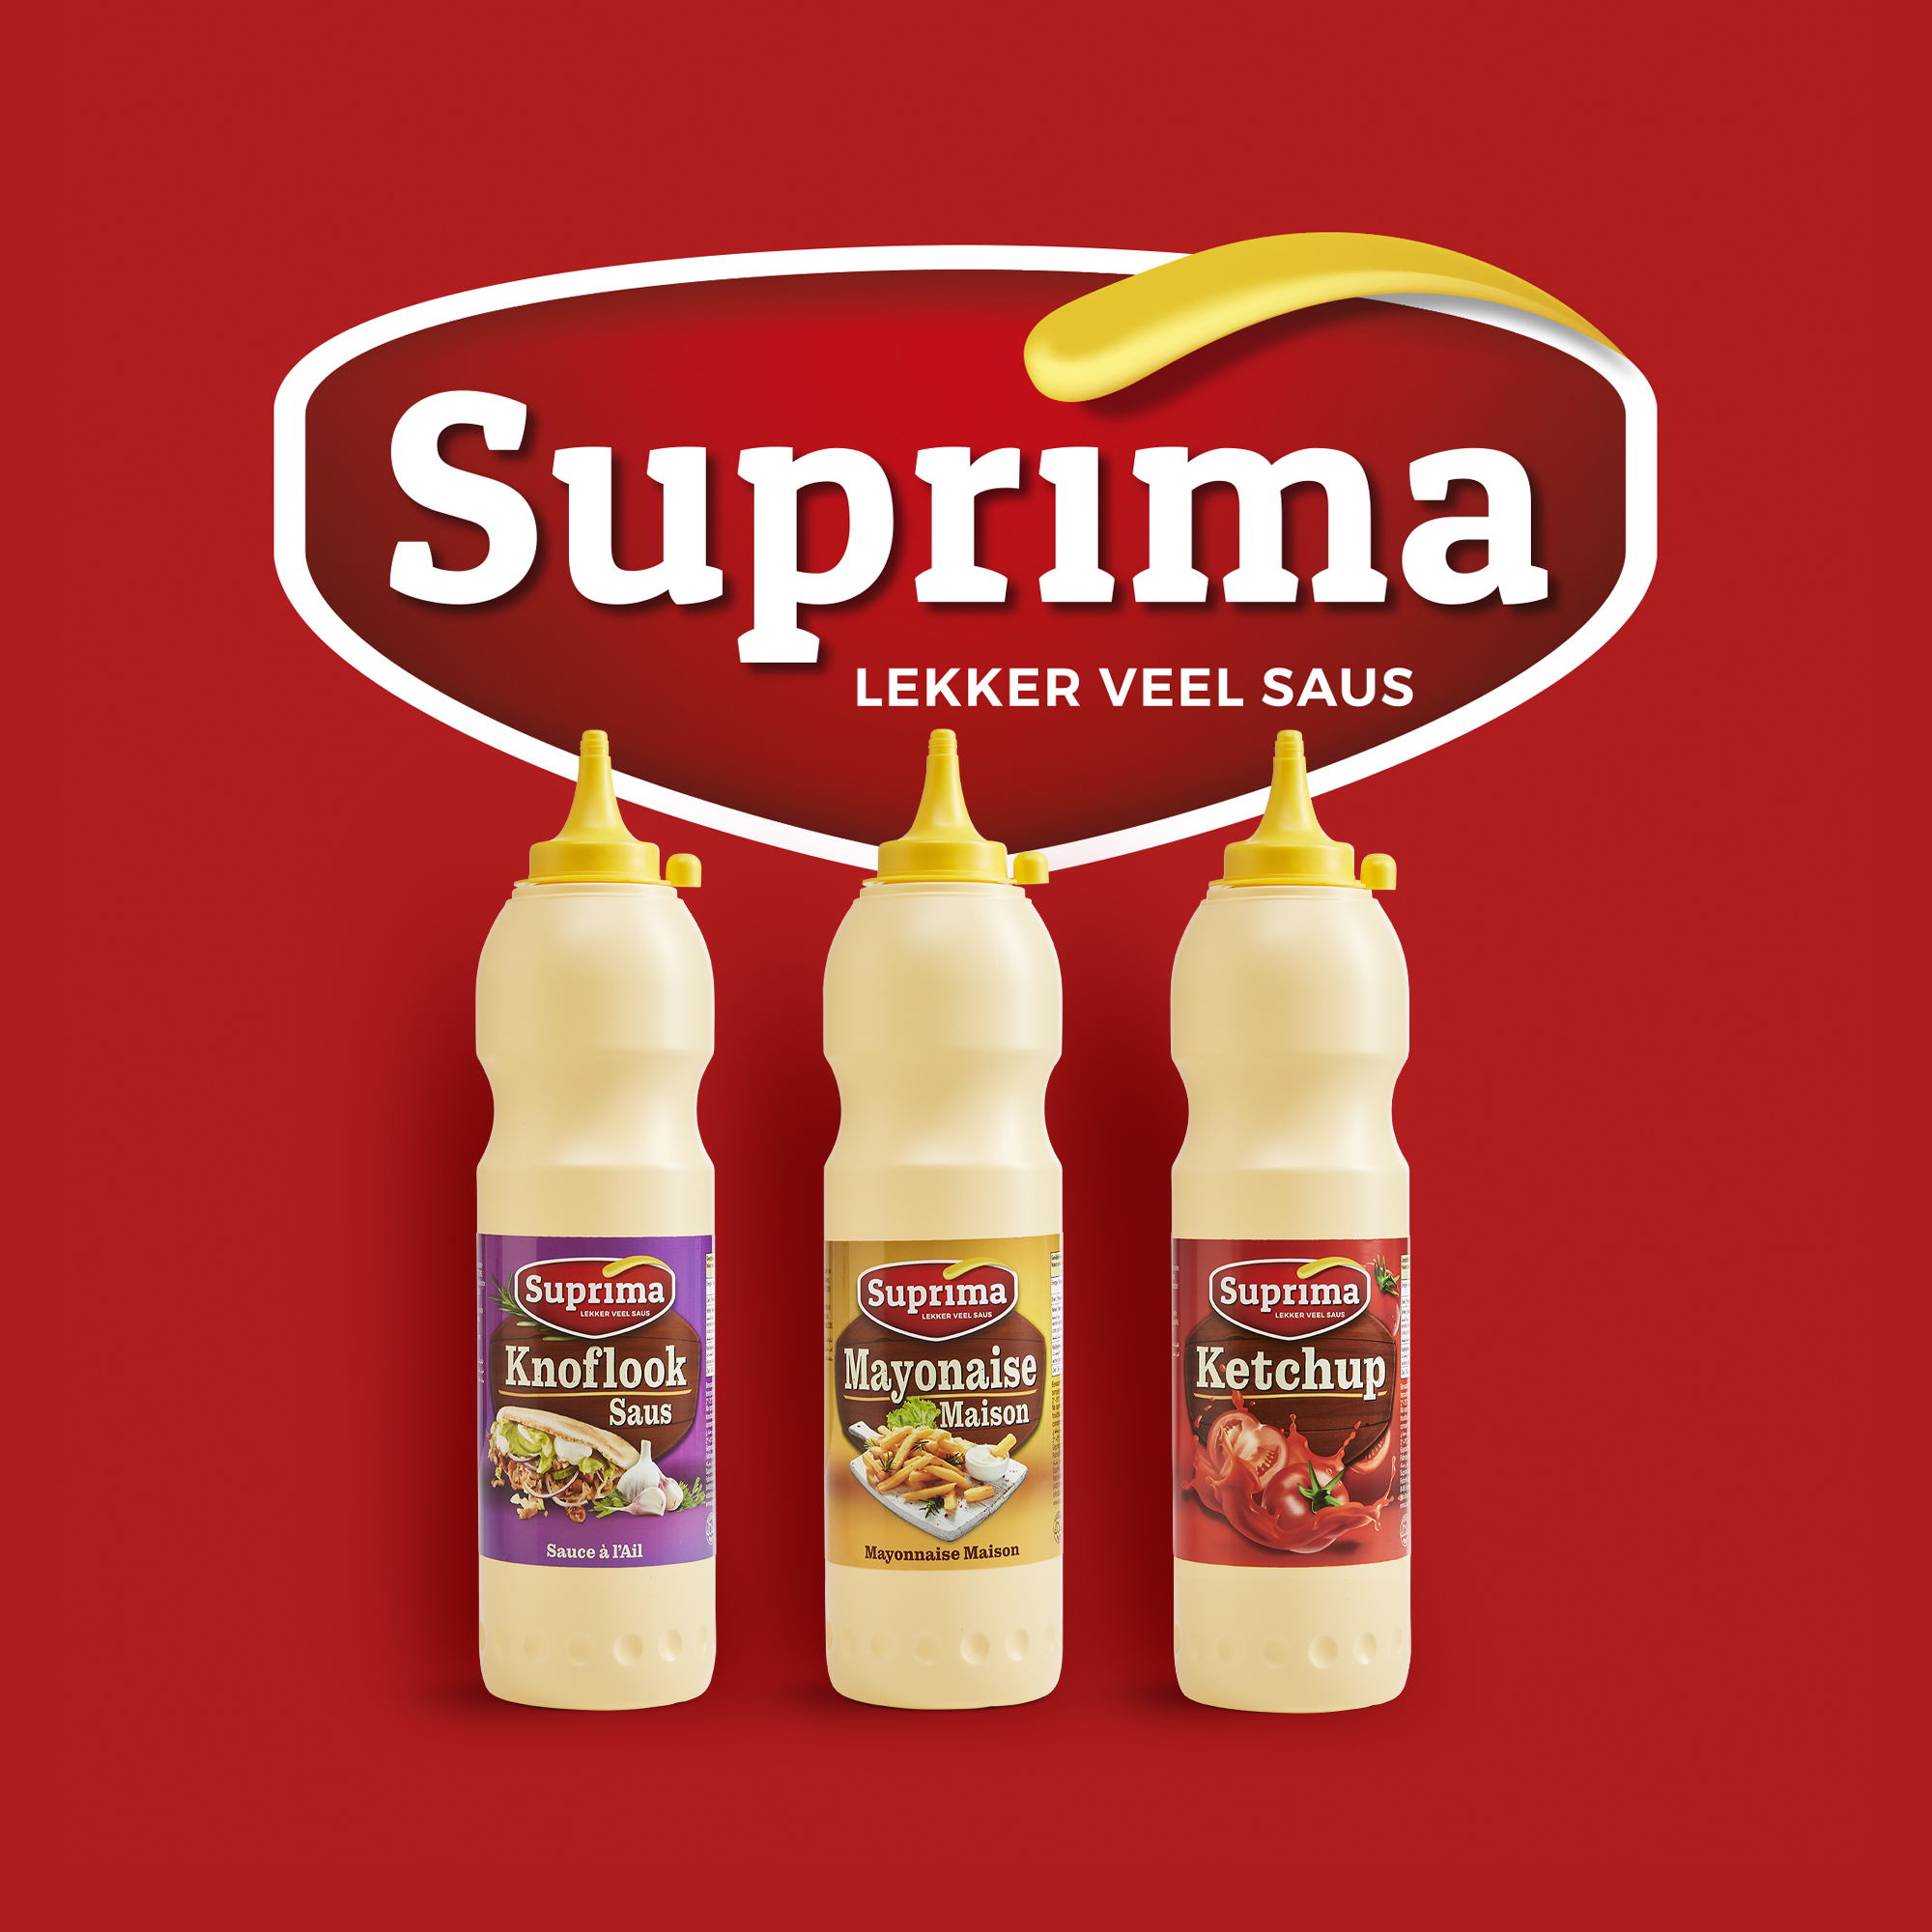 rebranding Suprima sauzen